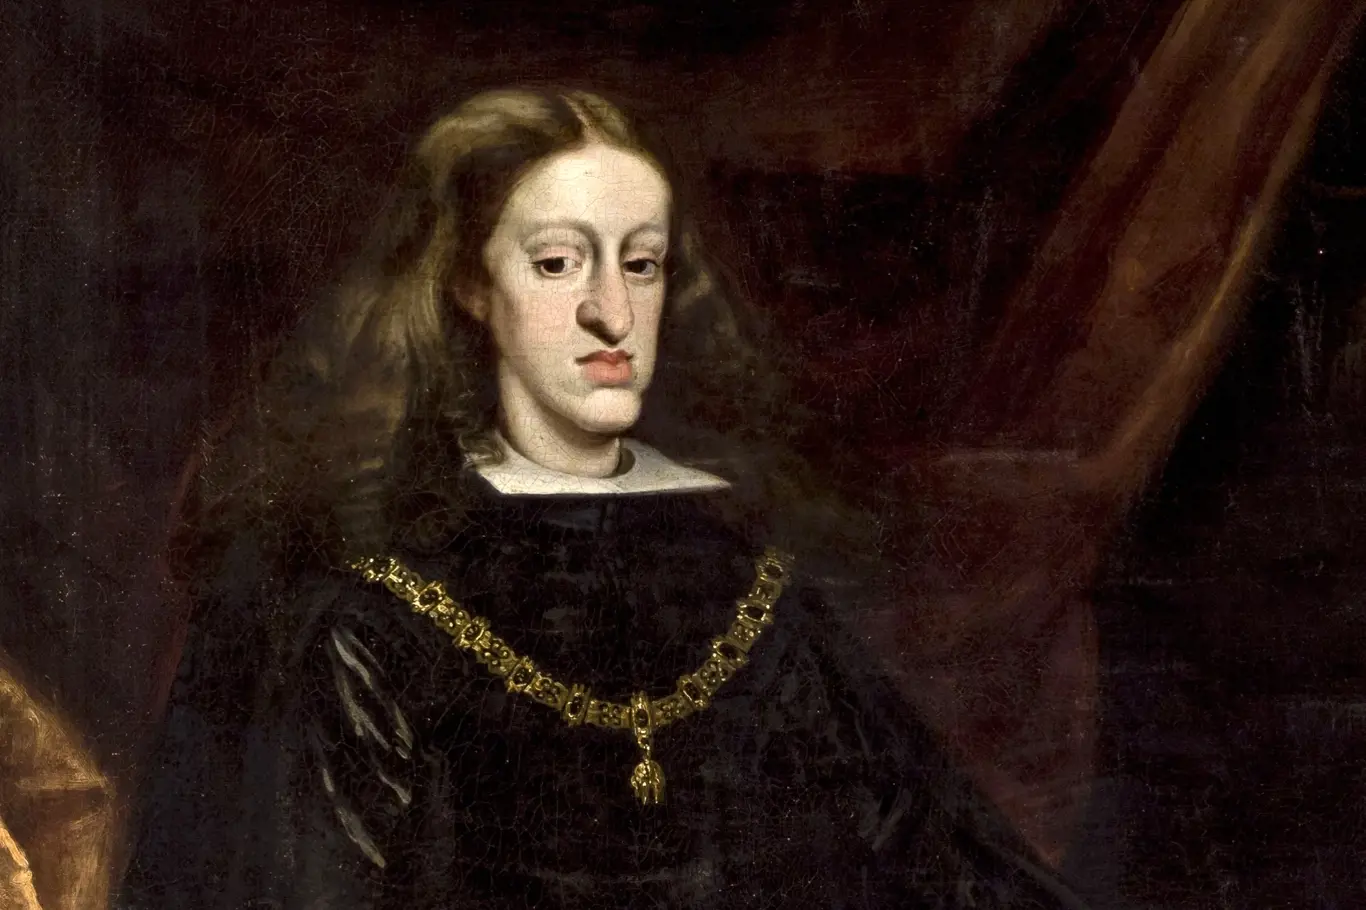 Karel II.